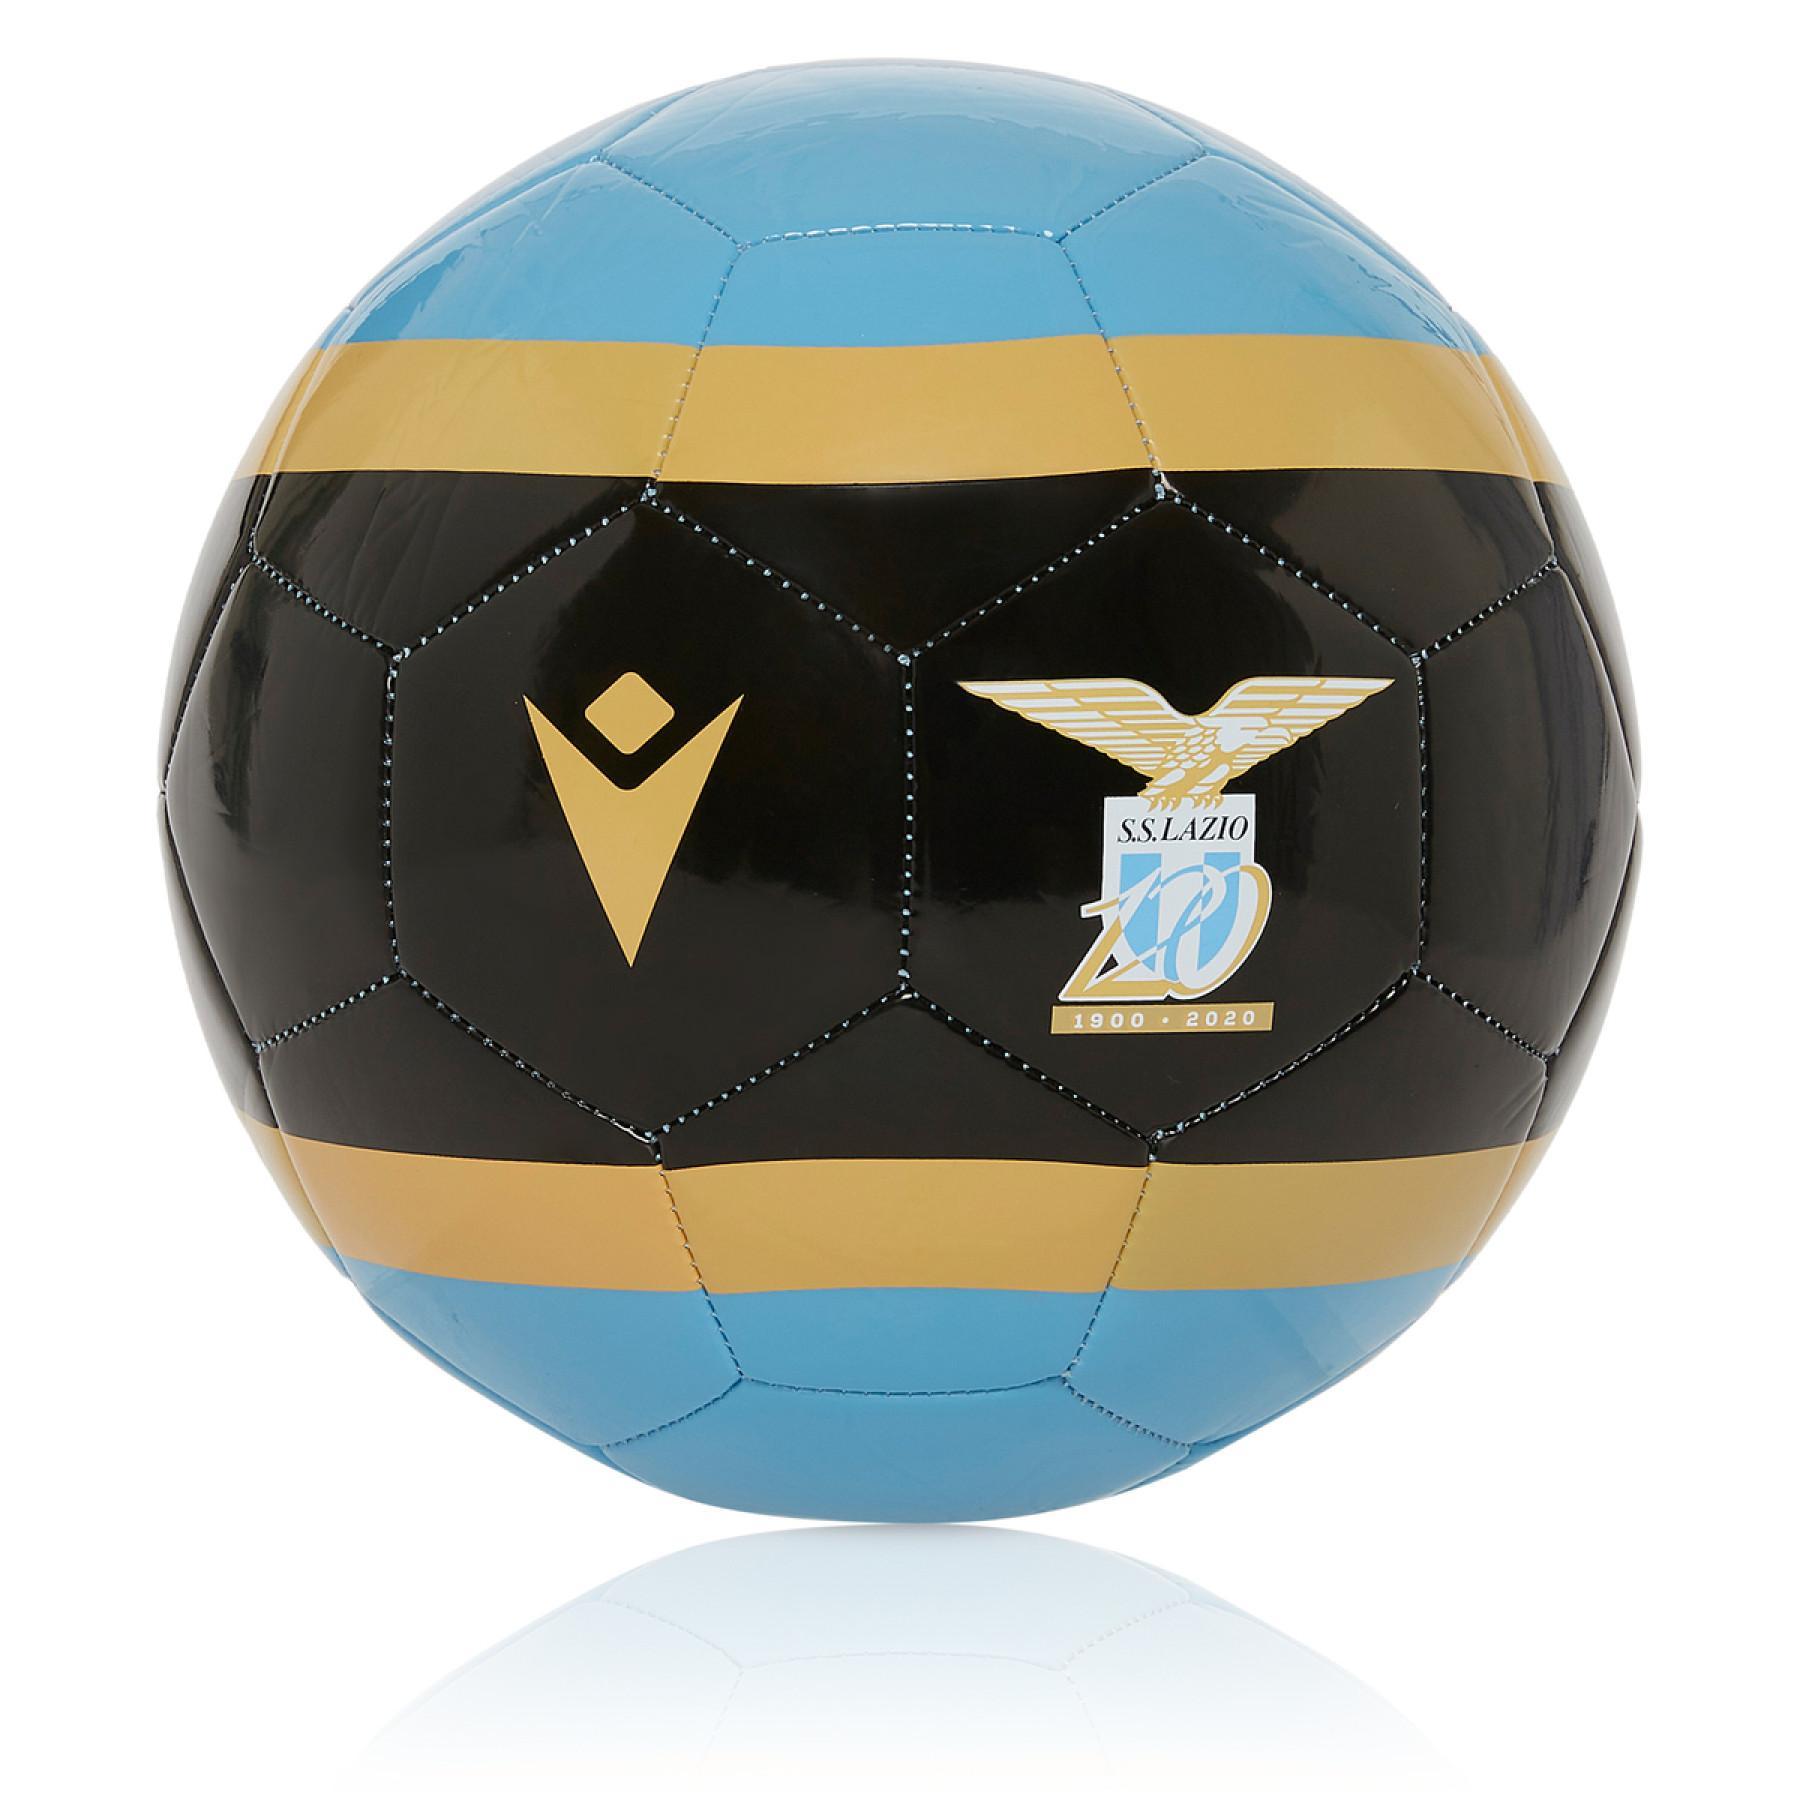 Balloon Lazio Rome europa 2020/21